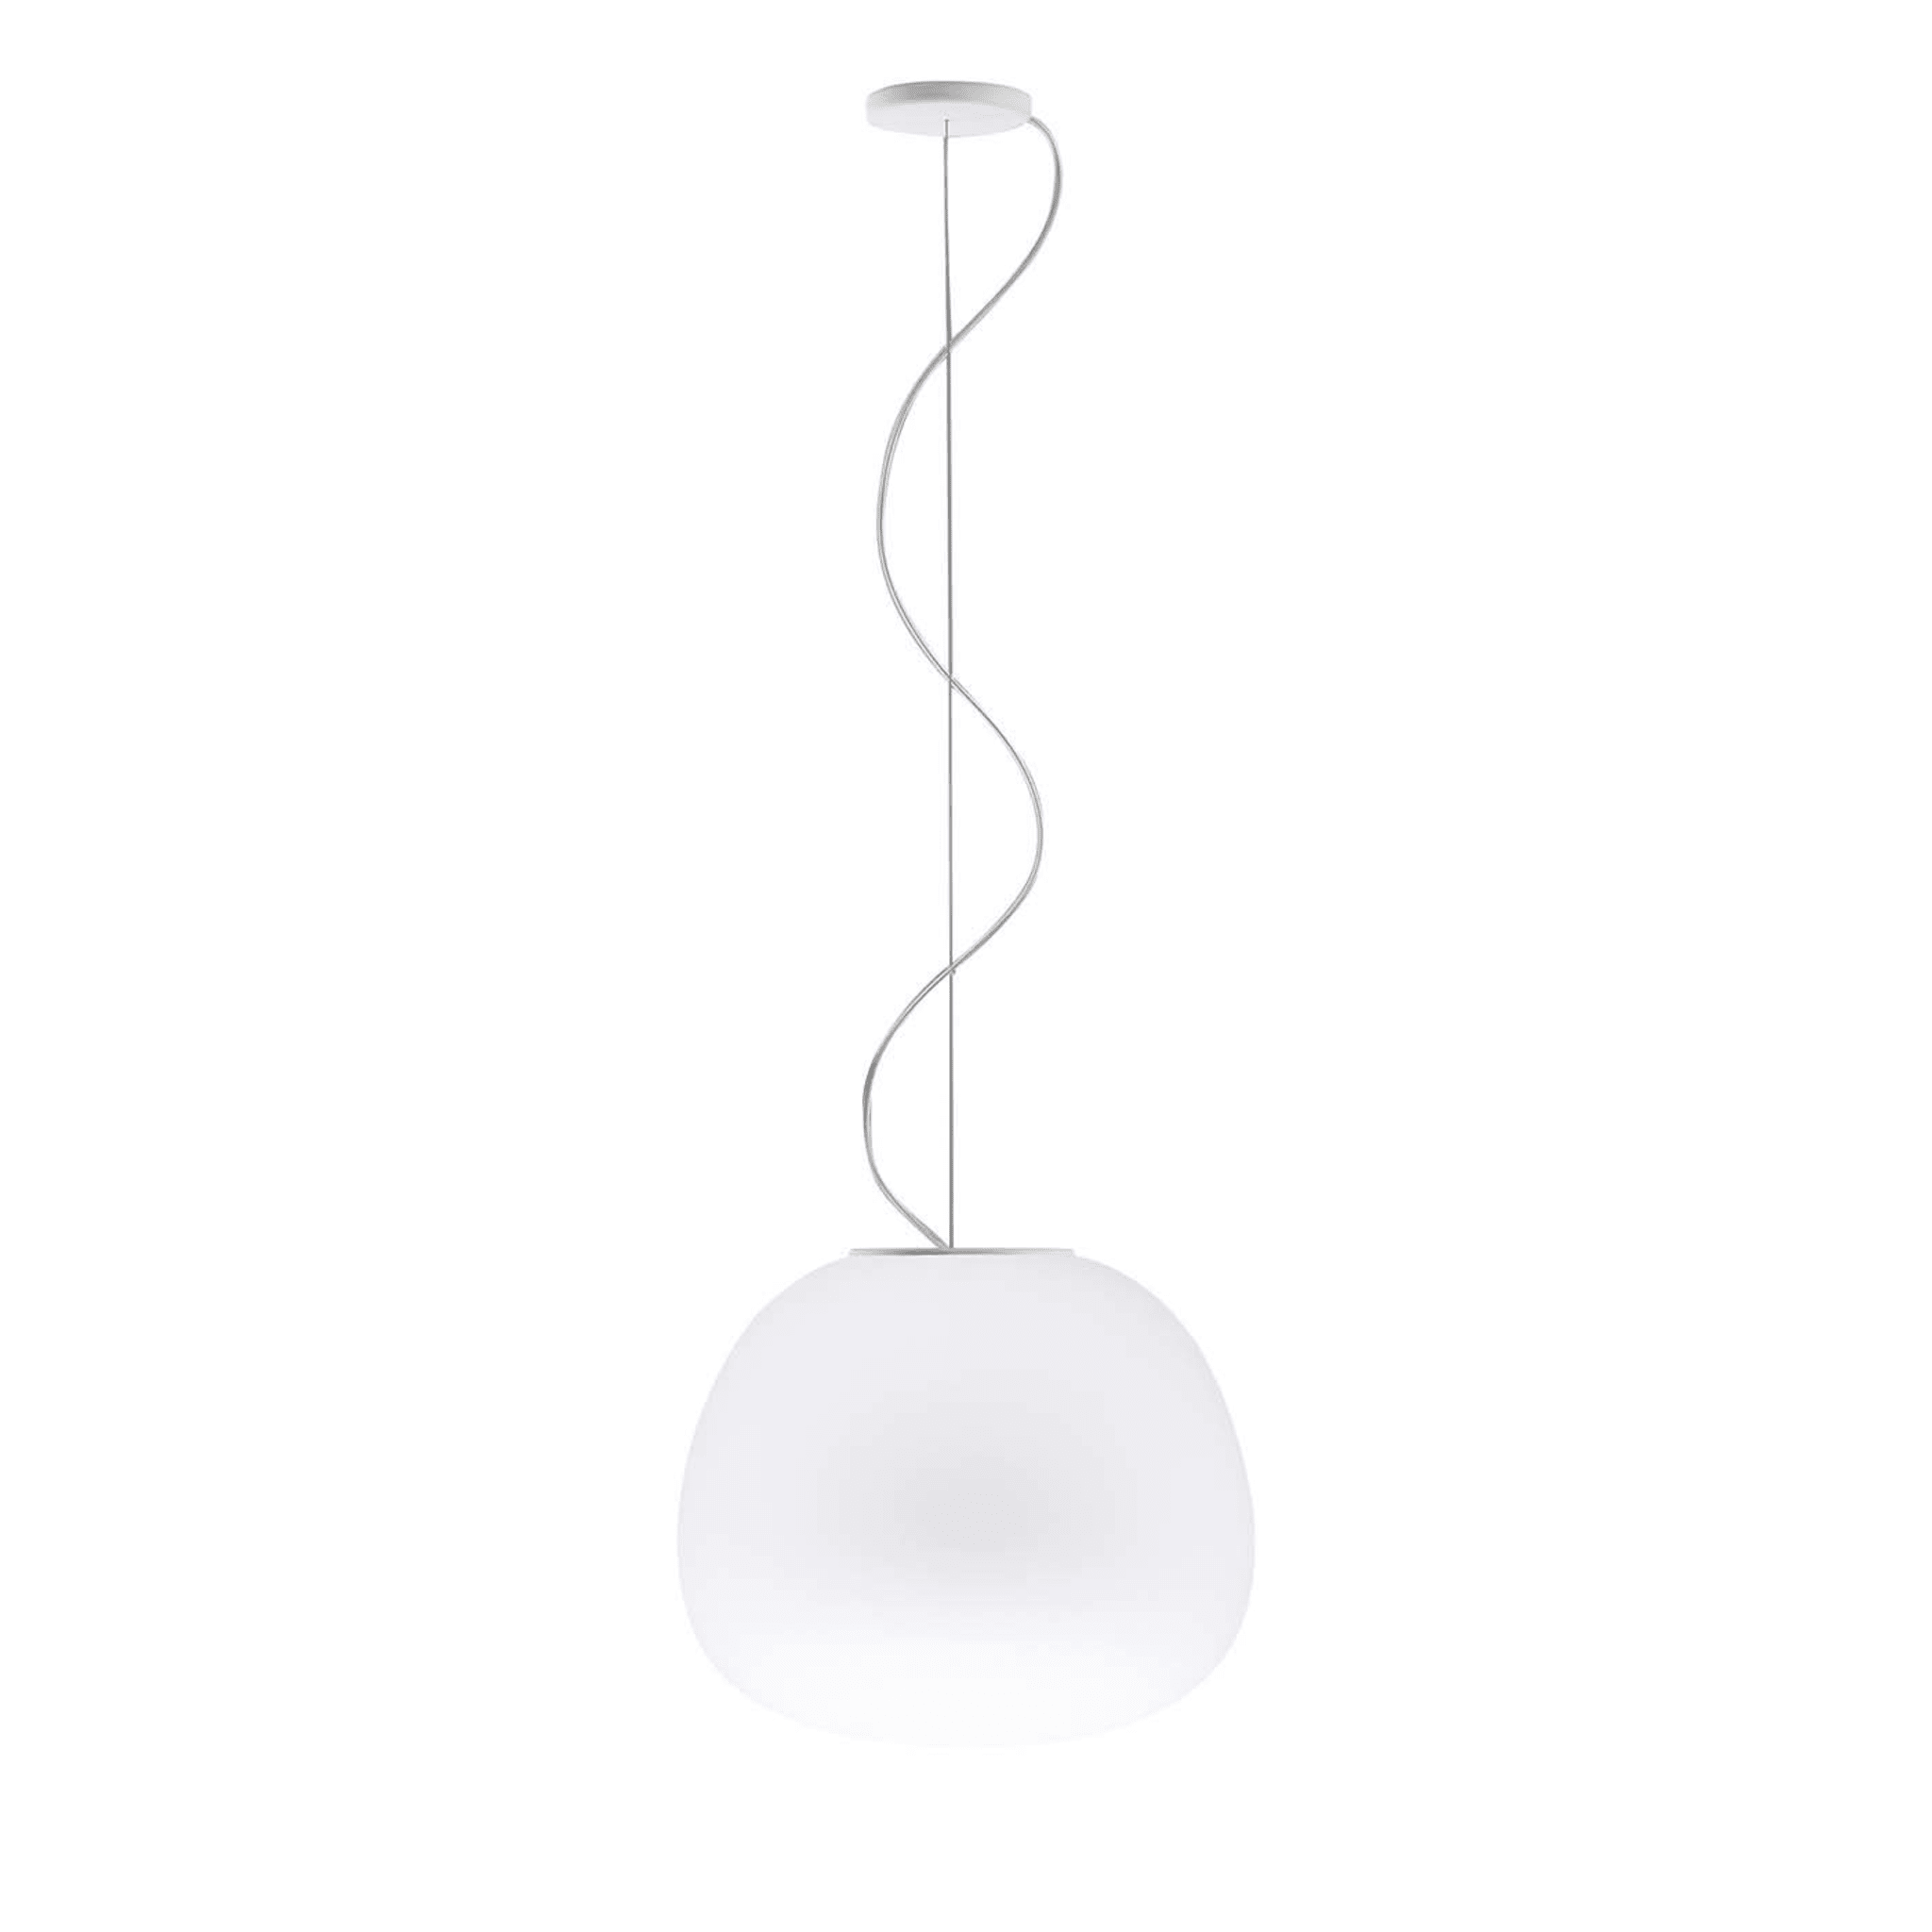 Lumi Mochi Pendant Lamp by Saggia & Sommella - Main view